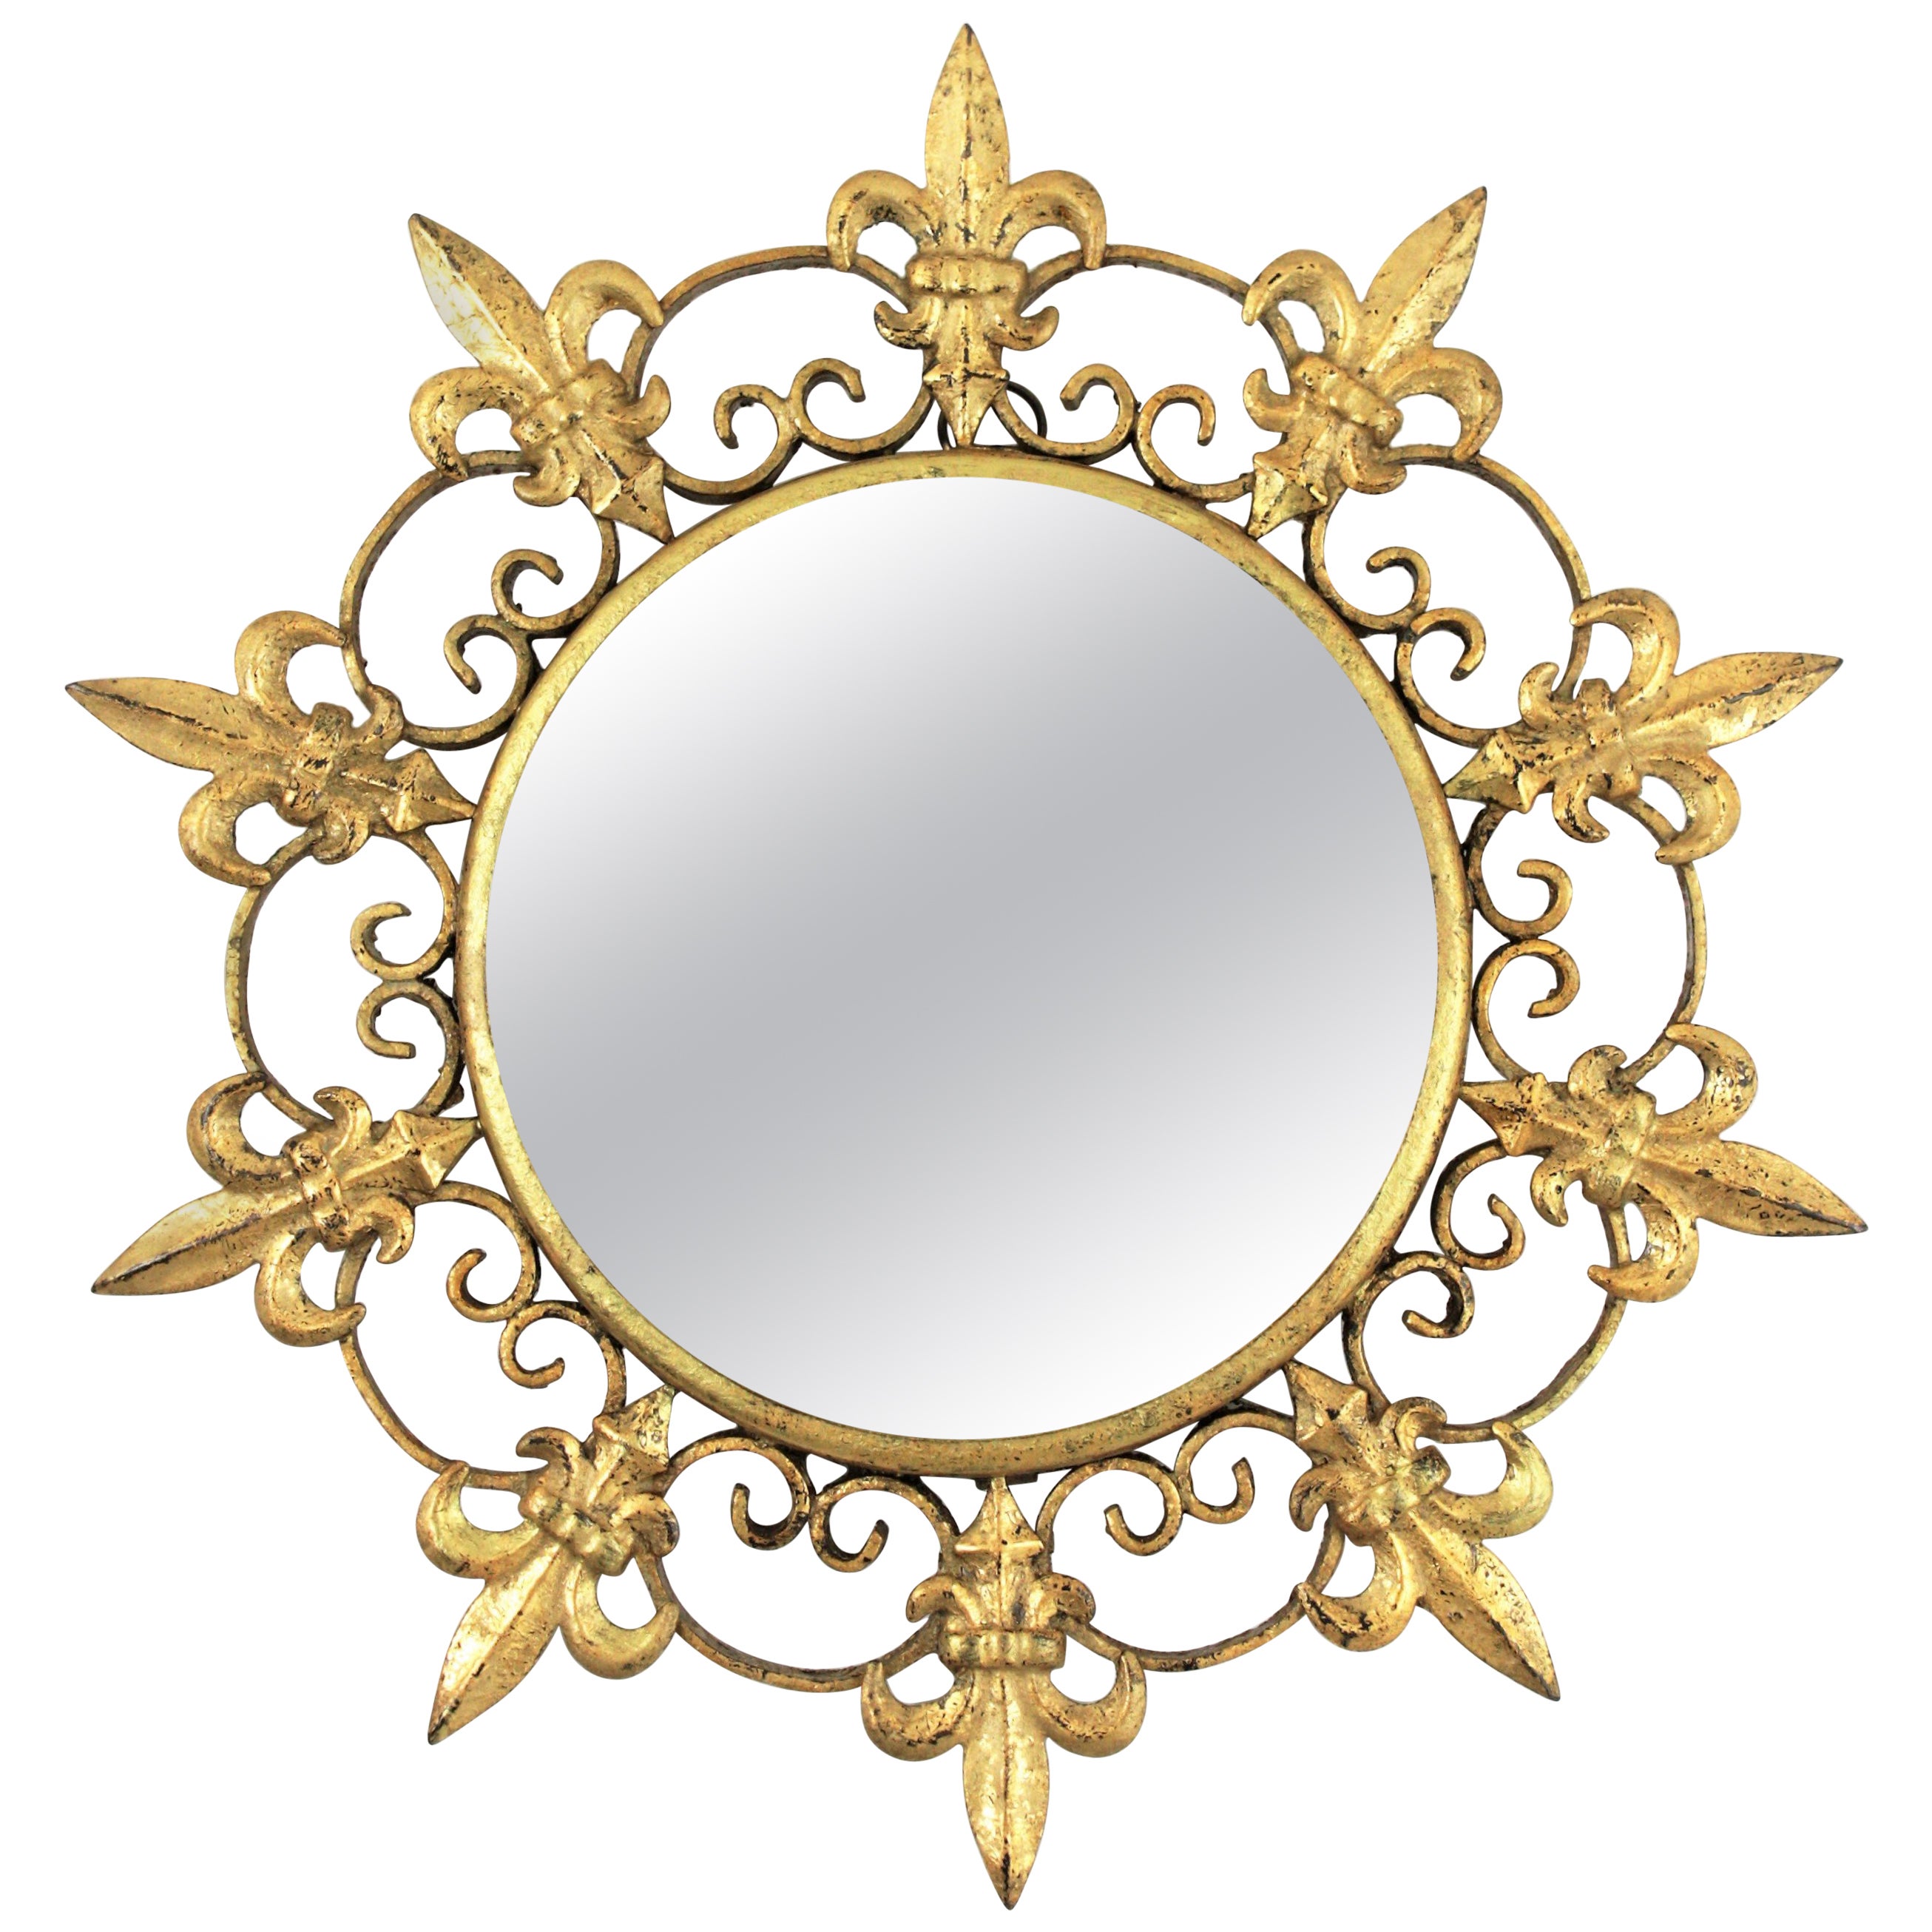 Gilt Sunburst Mirror in Small Scale, Fleur de Lys Design